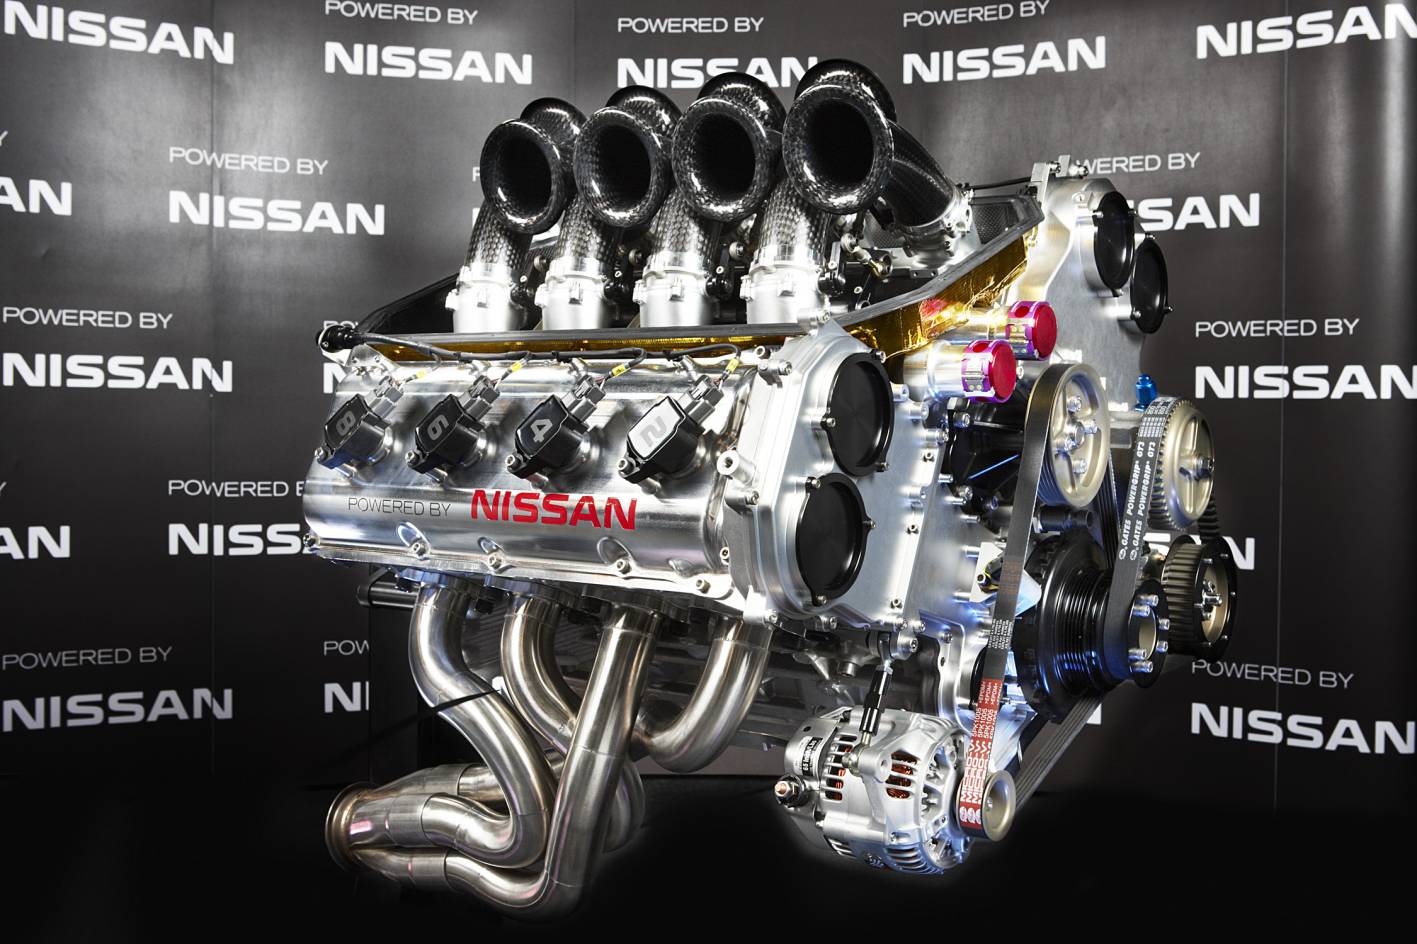 Nissan v8 supercar teams #1